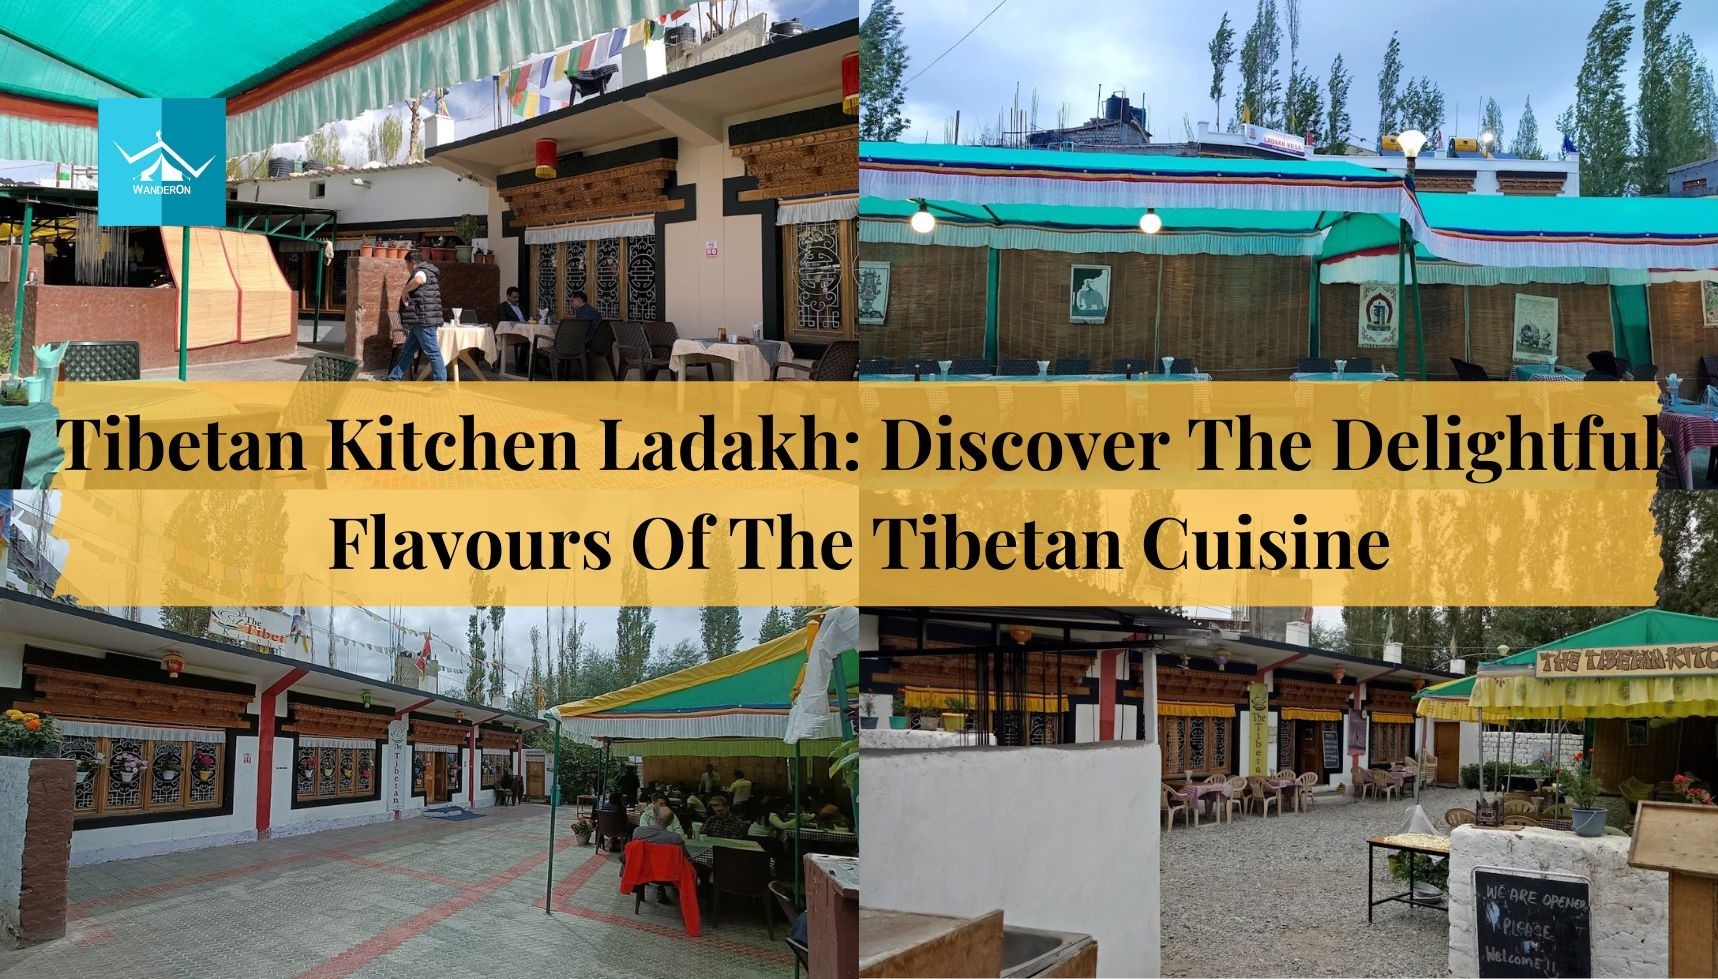 Savor Authentic Tibetan Flavors at Tibetan Kitchen Ladakh